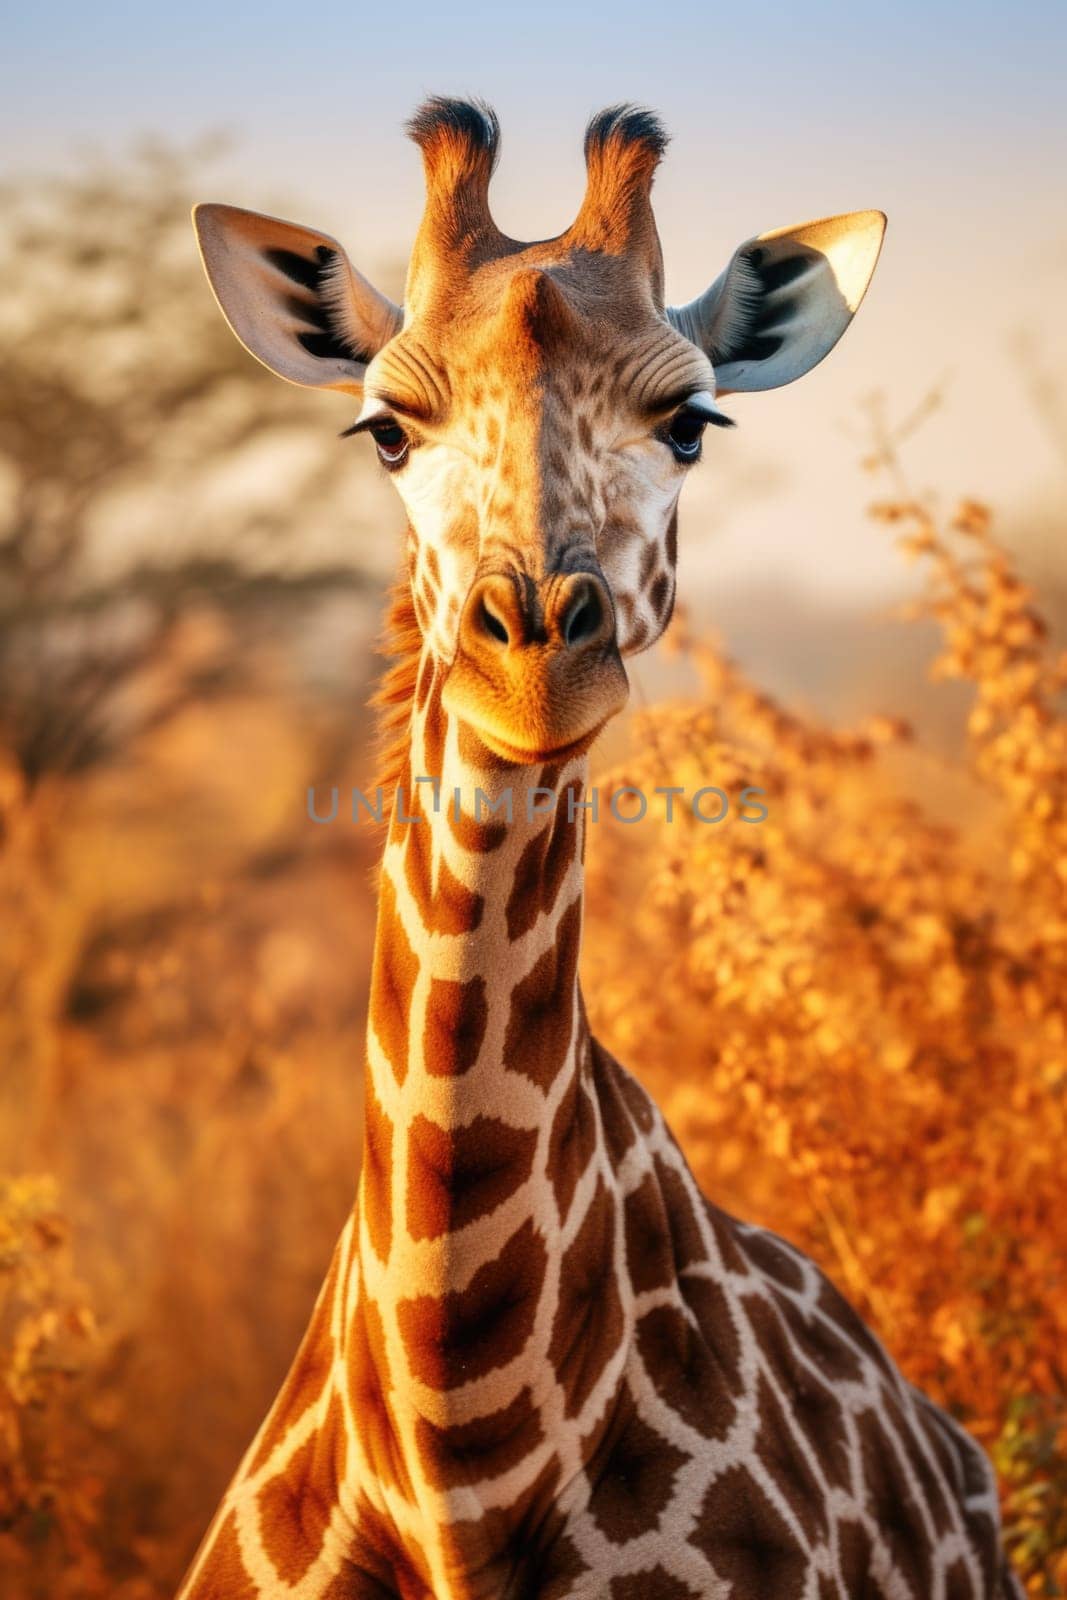 A giraffe strolling through the savannah in the wild of Africa by Lobachad